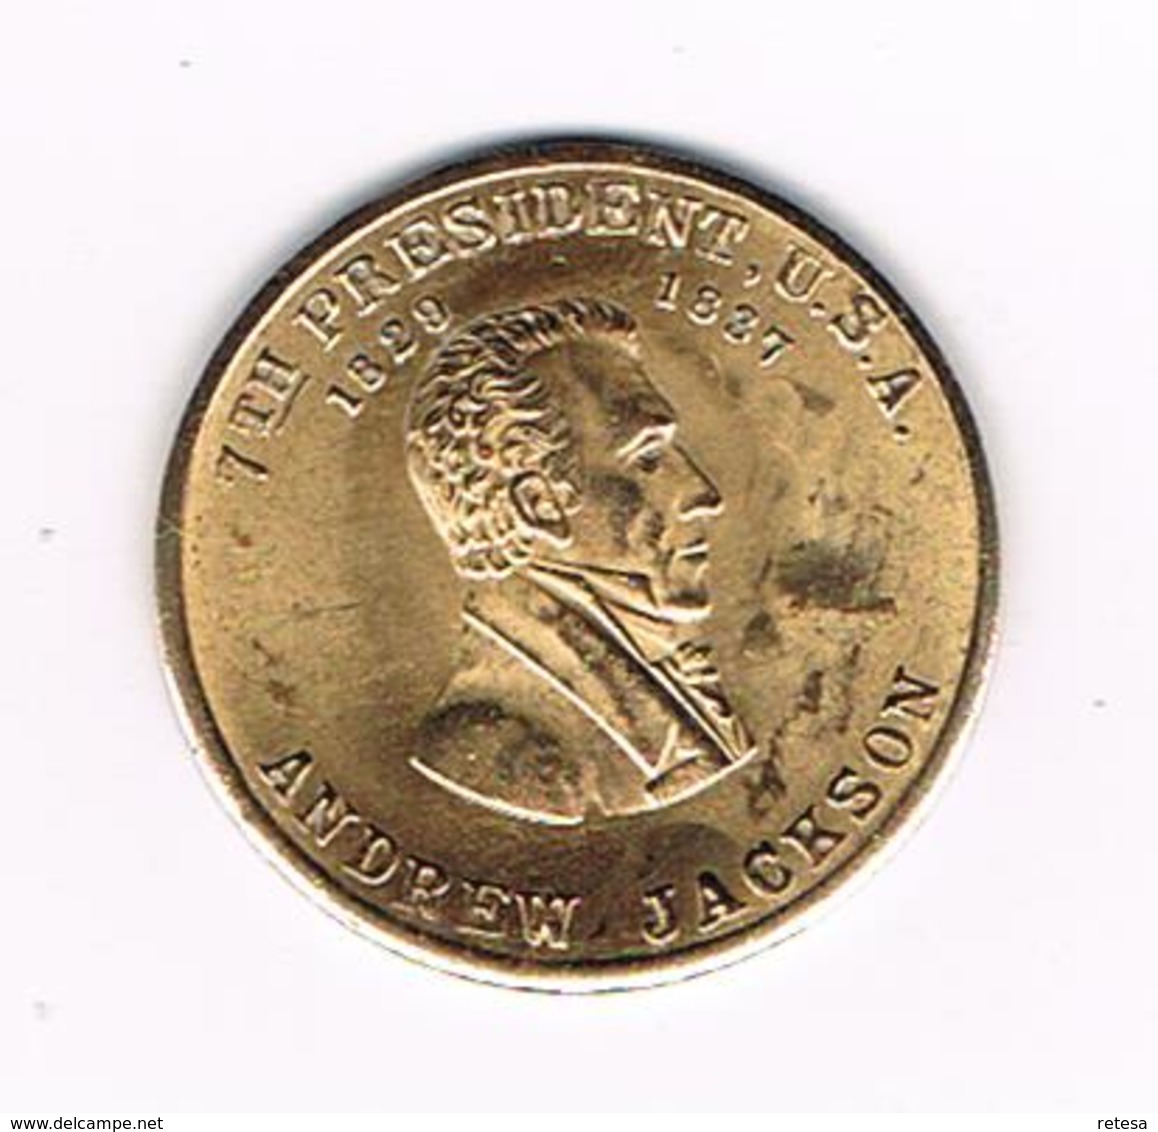 &- PENNING  ANDREW  JACKSON  7 TH  PRESIDENT  U.S.A. - Souvenirmunten (elongated Coins)